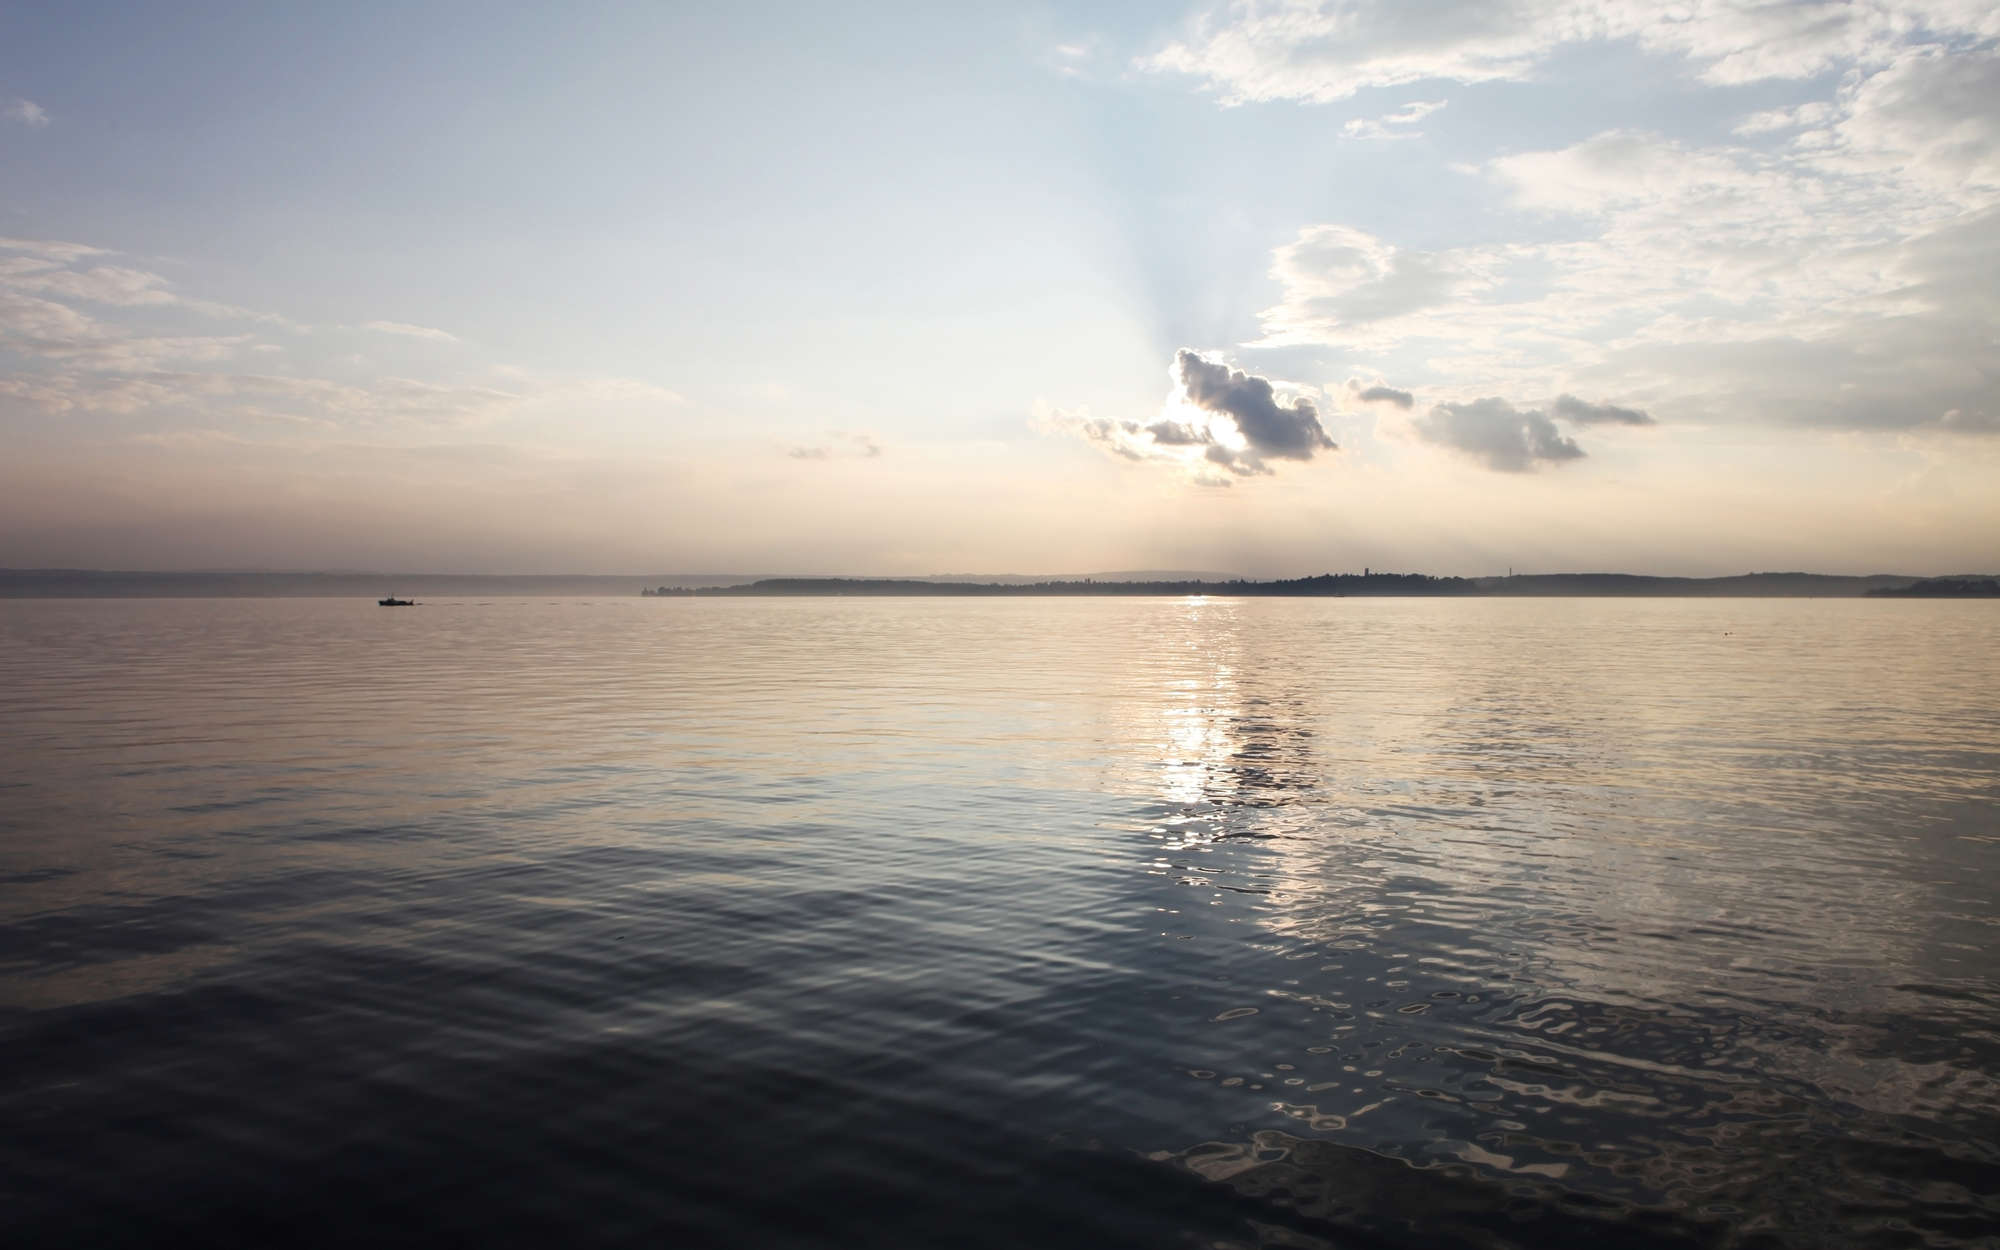             Fototapete Sonnenaufgang am See – Strukturiertes Vlies
        